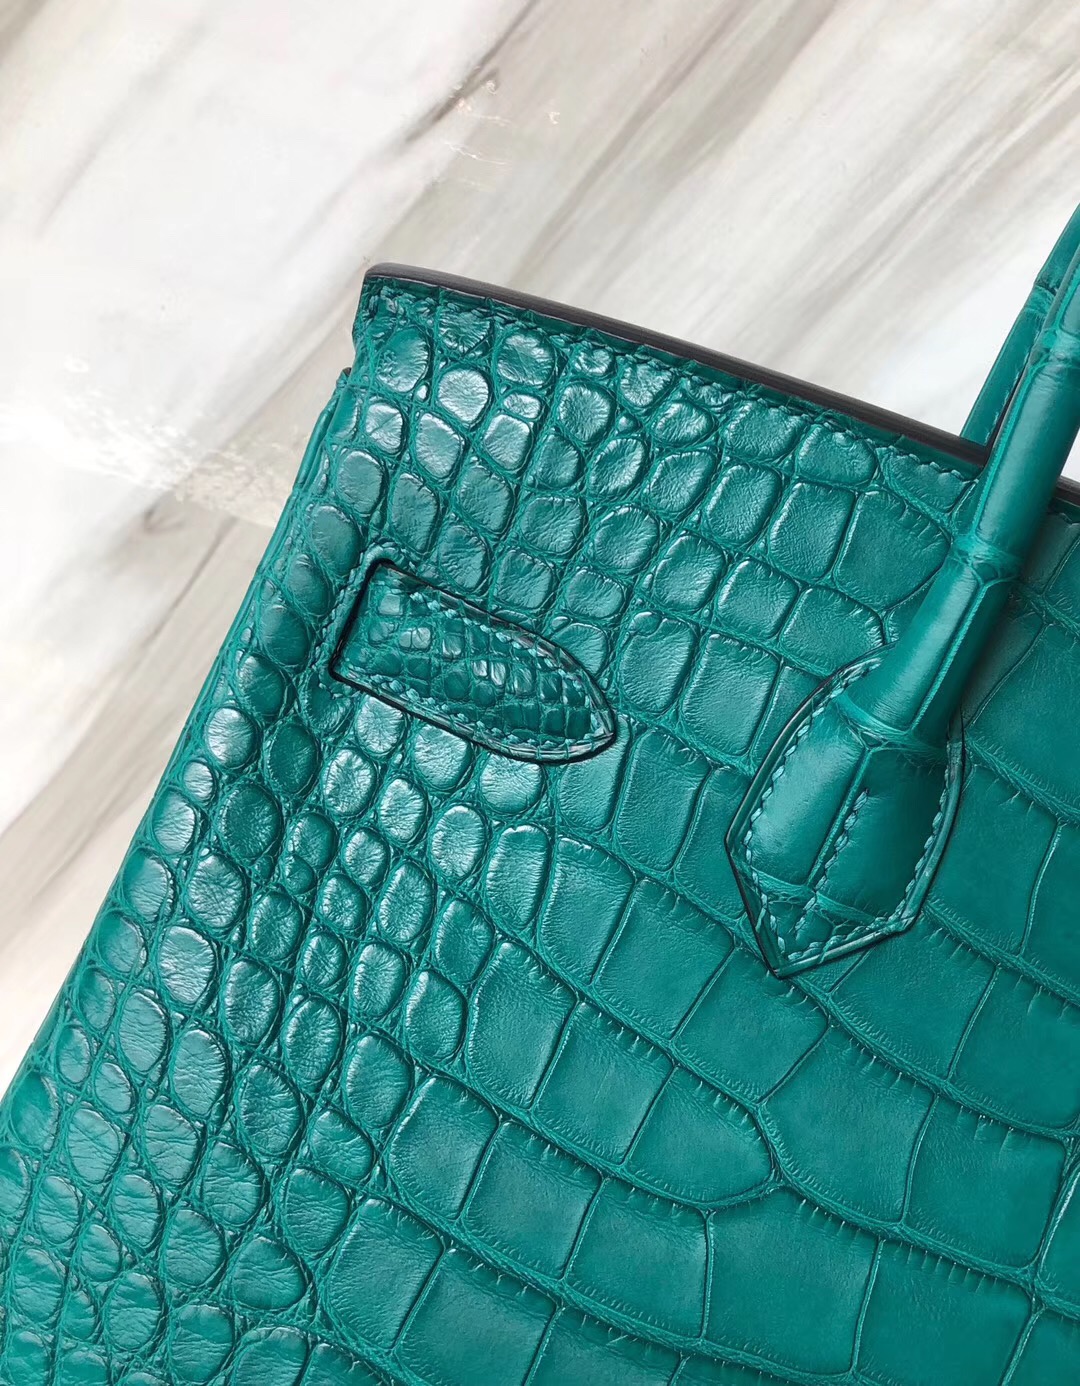 Hermès 7F孔雀藍 Blue paon Birkin 30cm Matte alligator crocodile